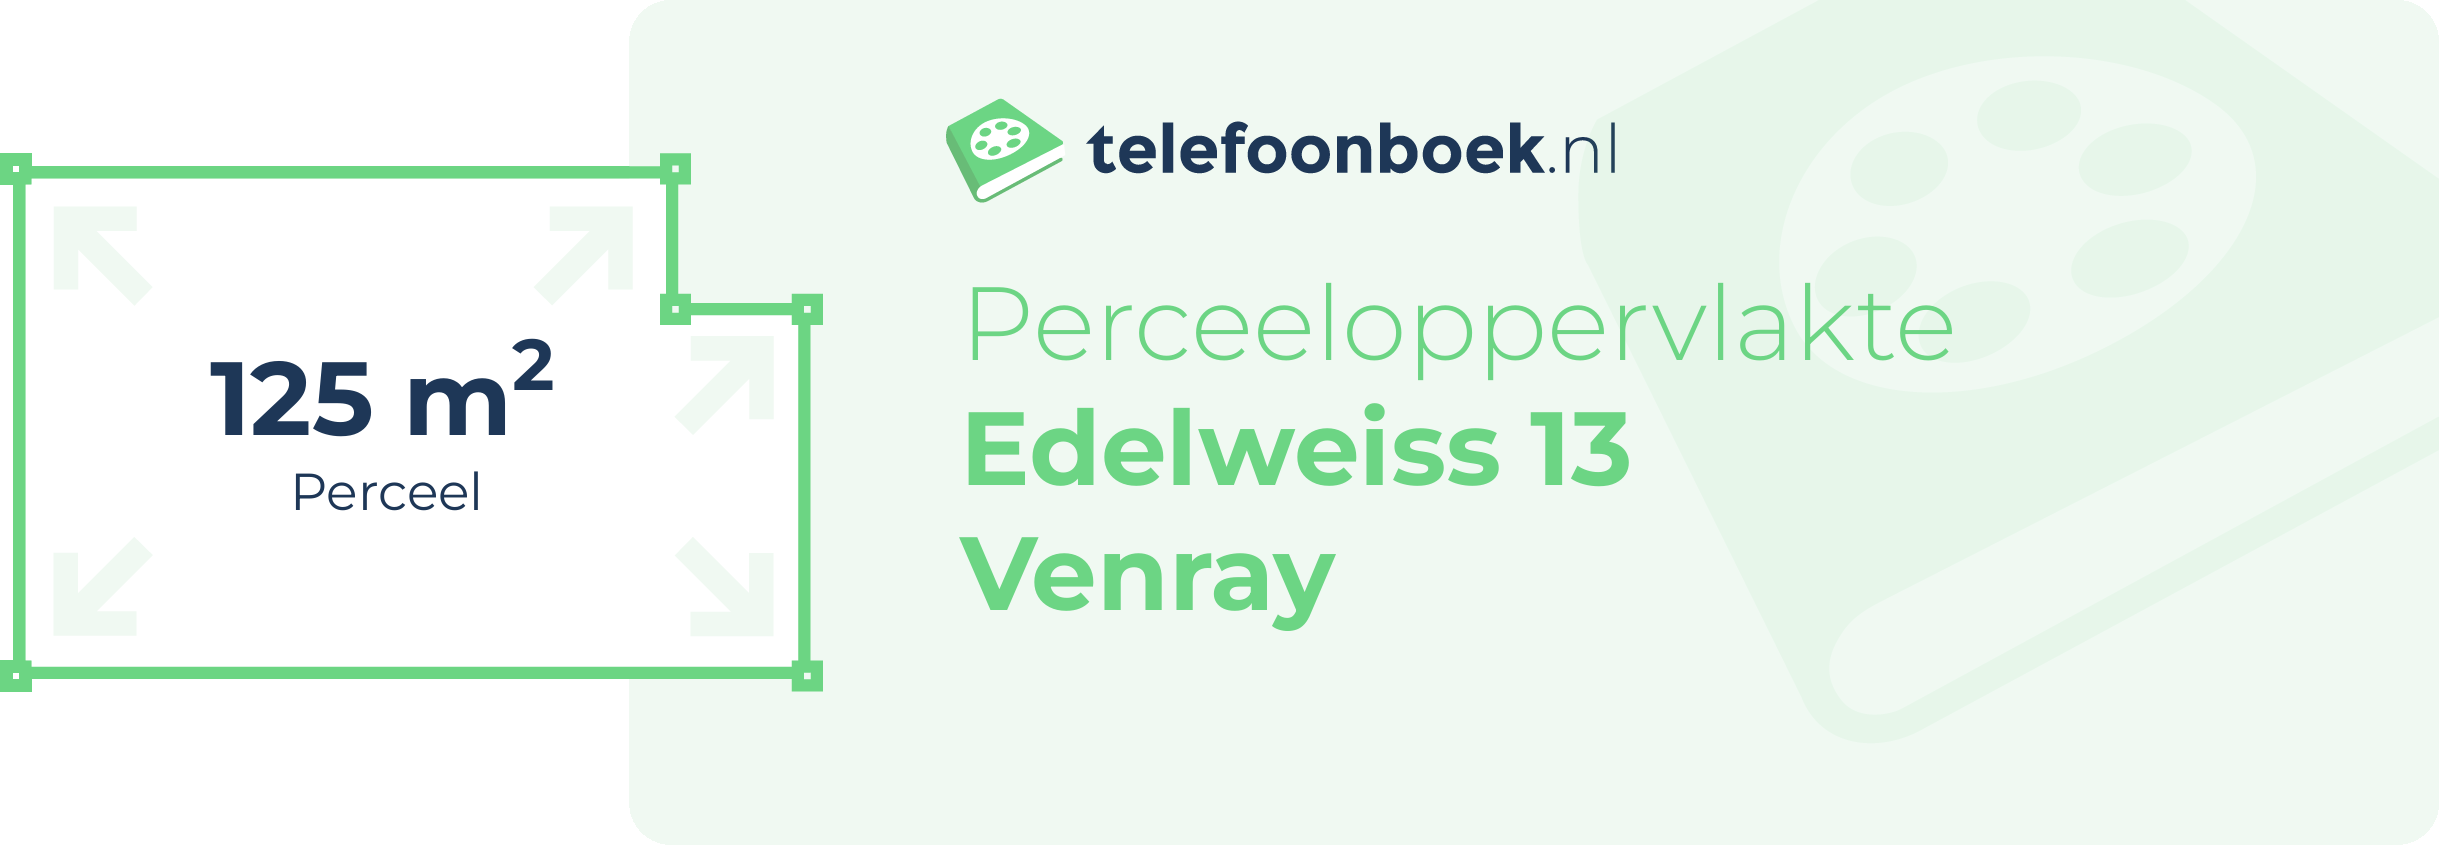 Perceeloppervlakte Edelweiss 13 Venray